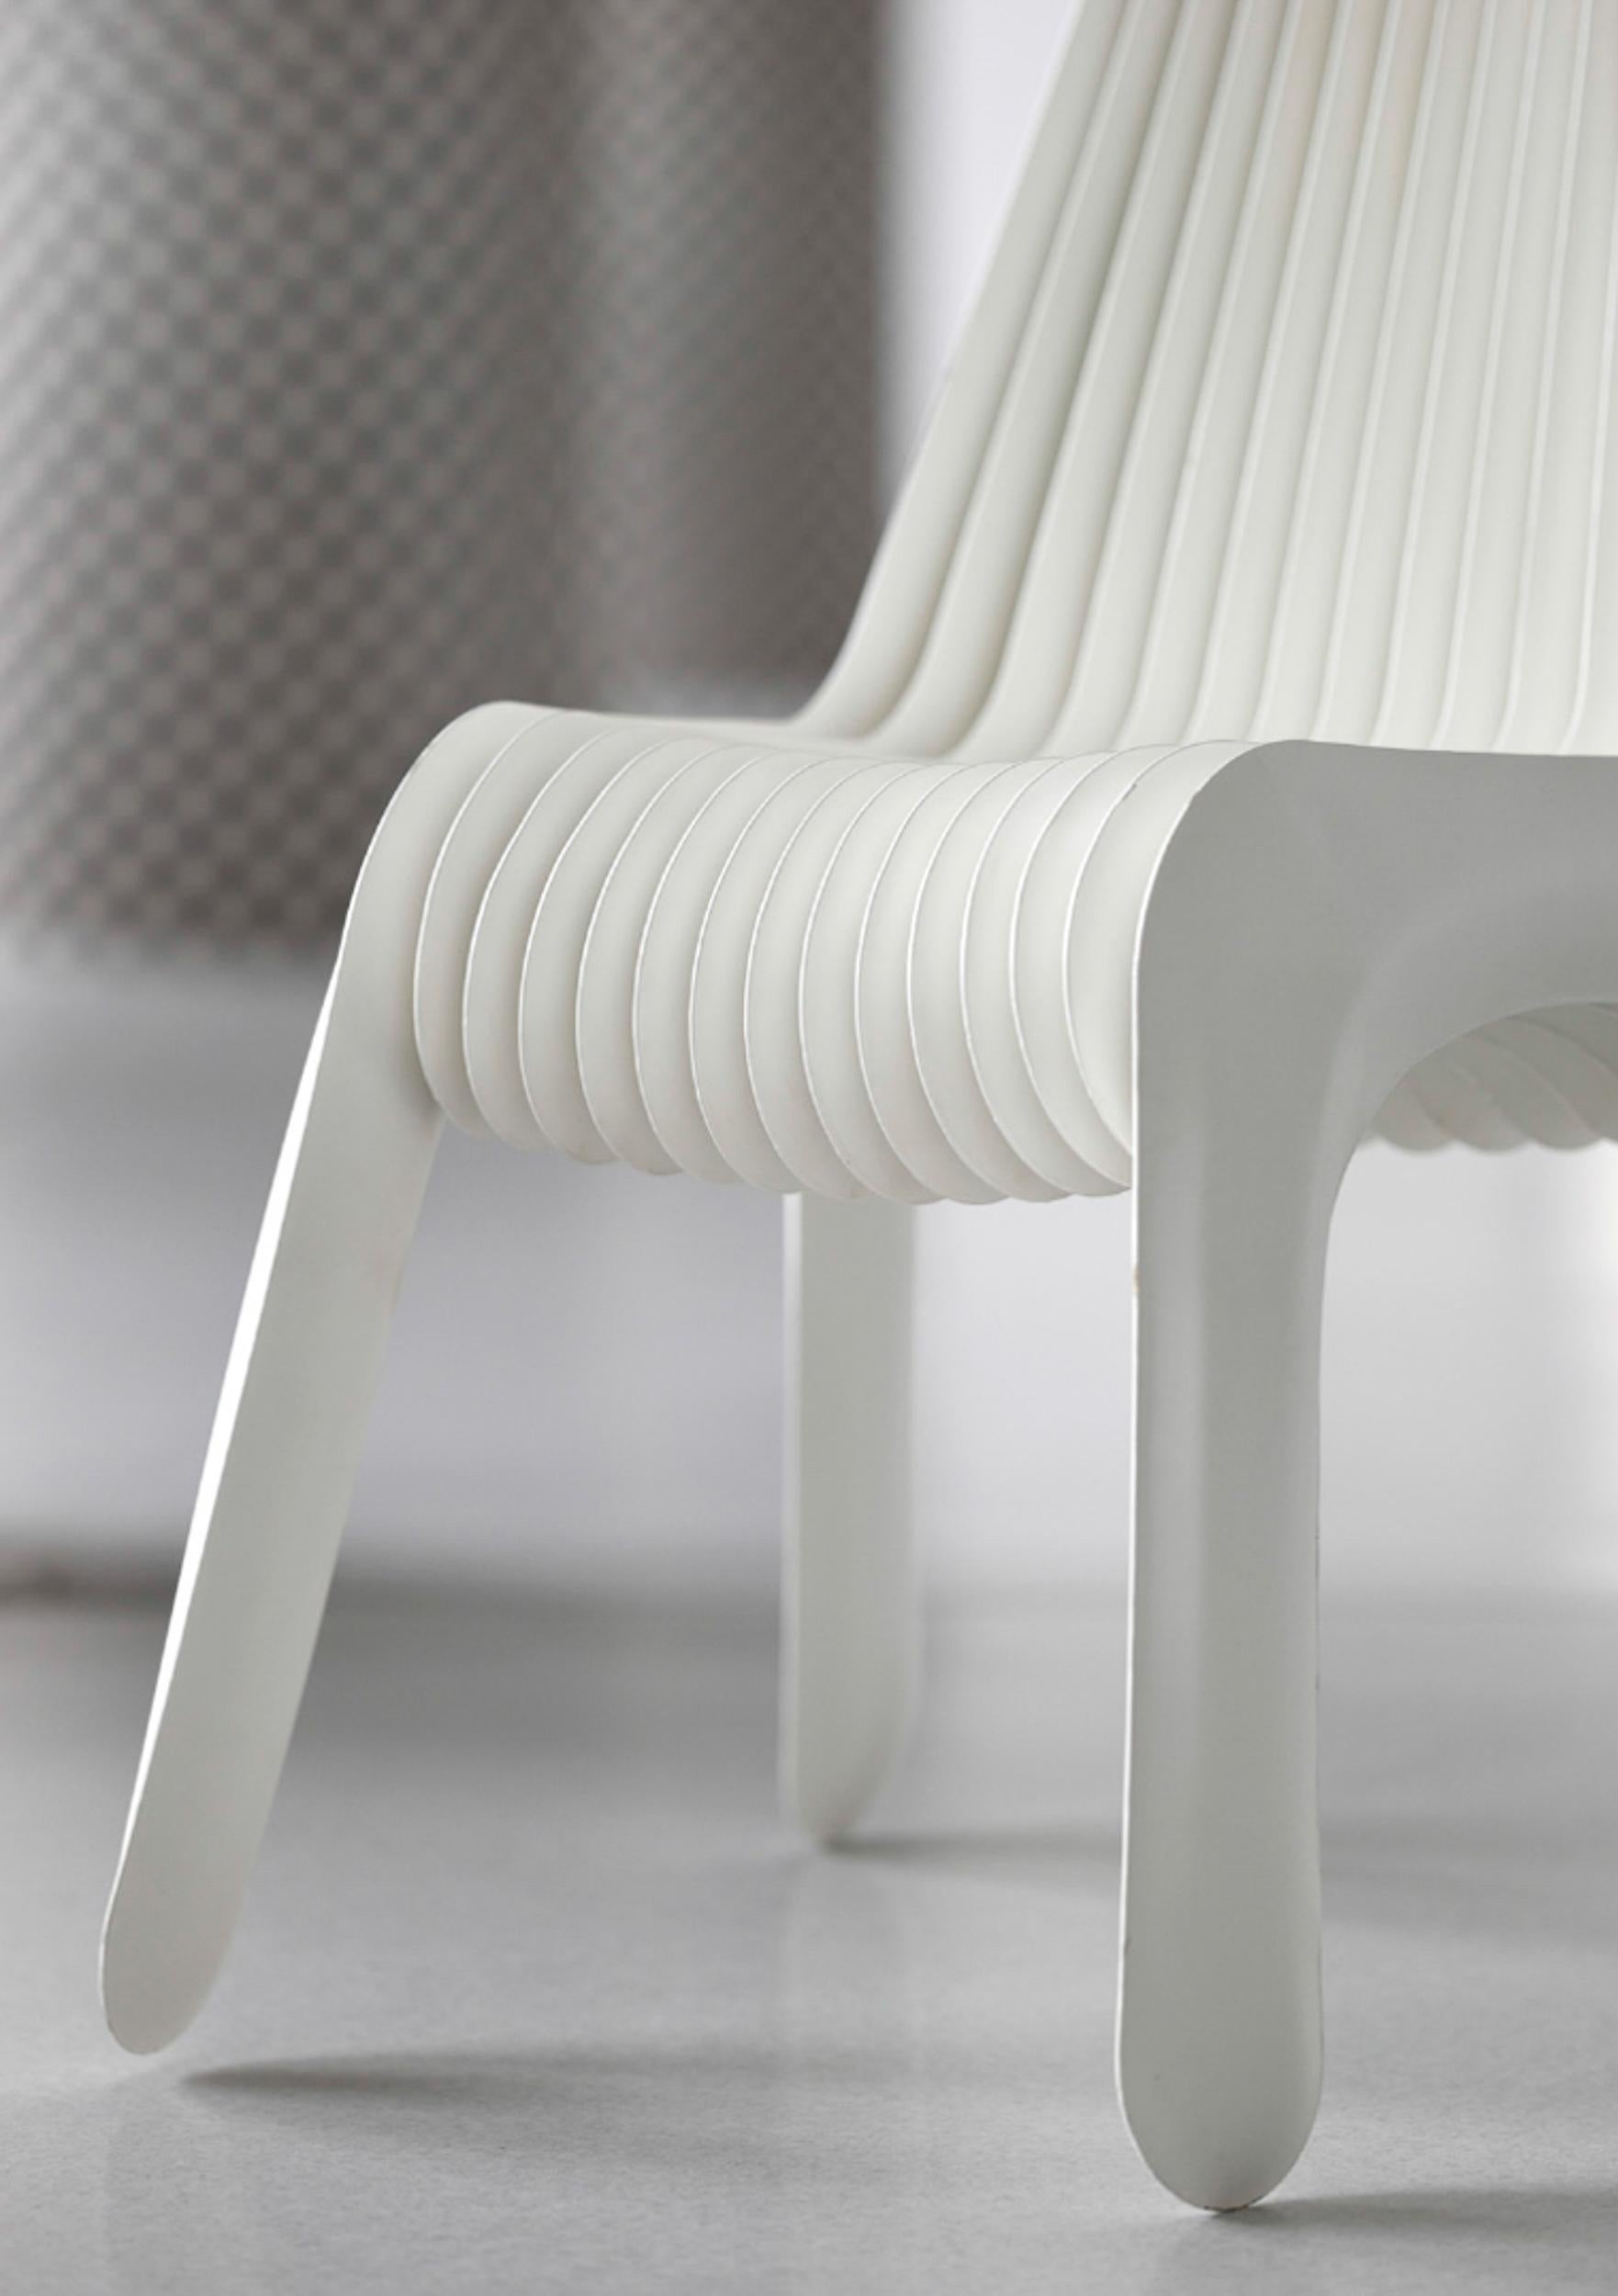 Industrial Steel in Rotation Chair by Zieta, White Matt, Carbon Steel For Sale